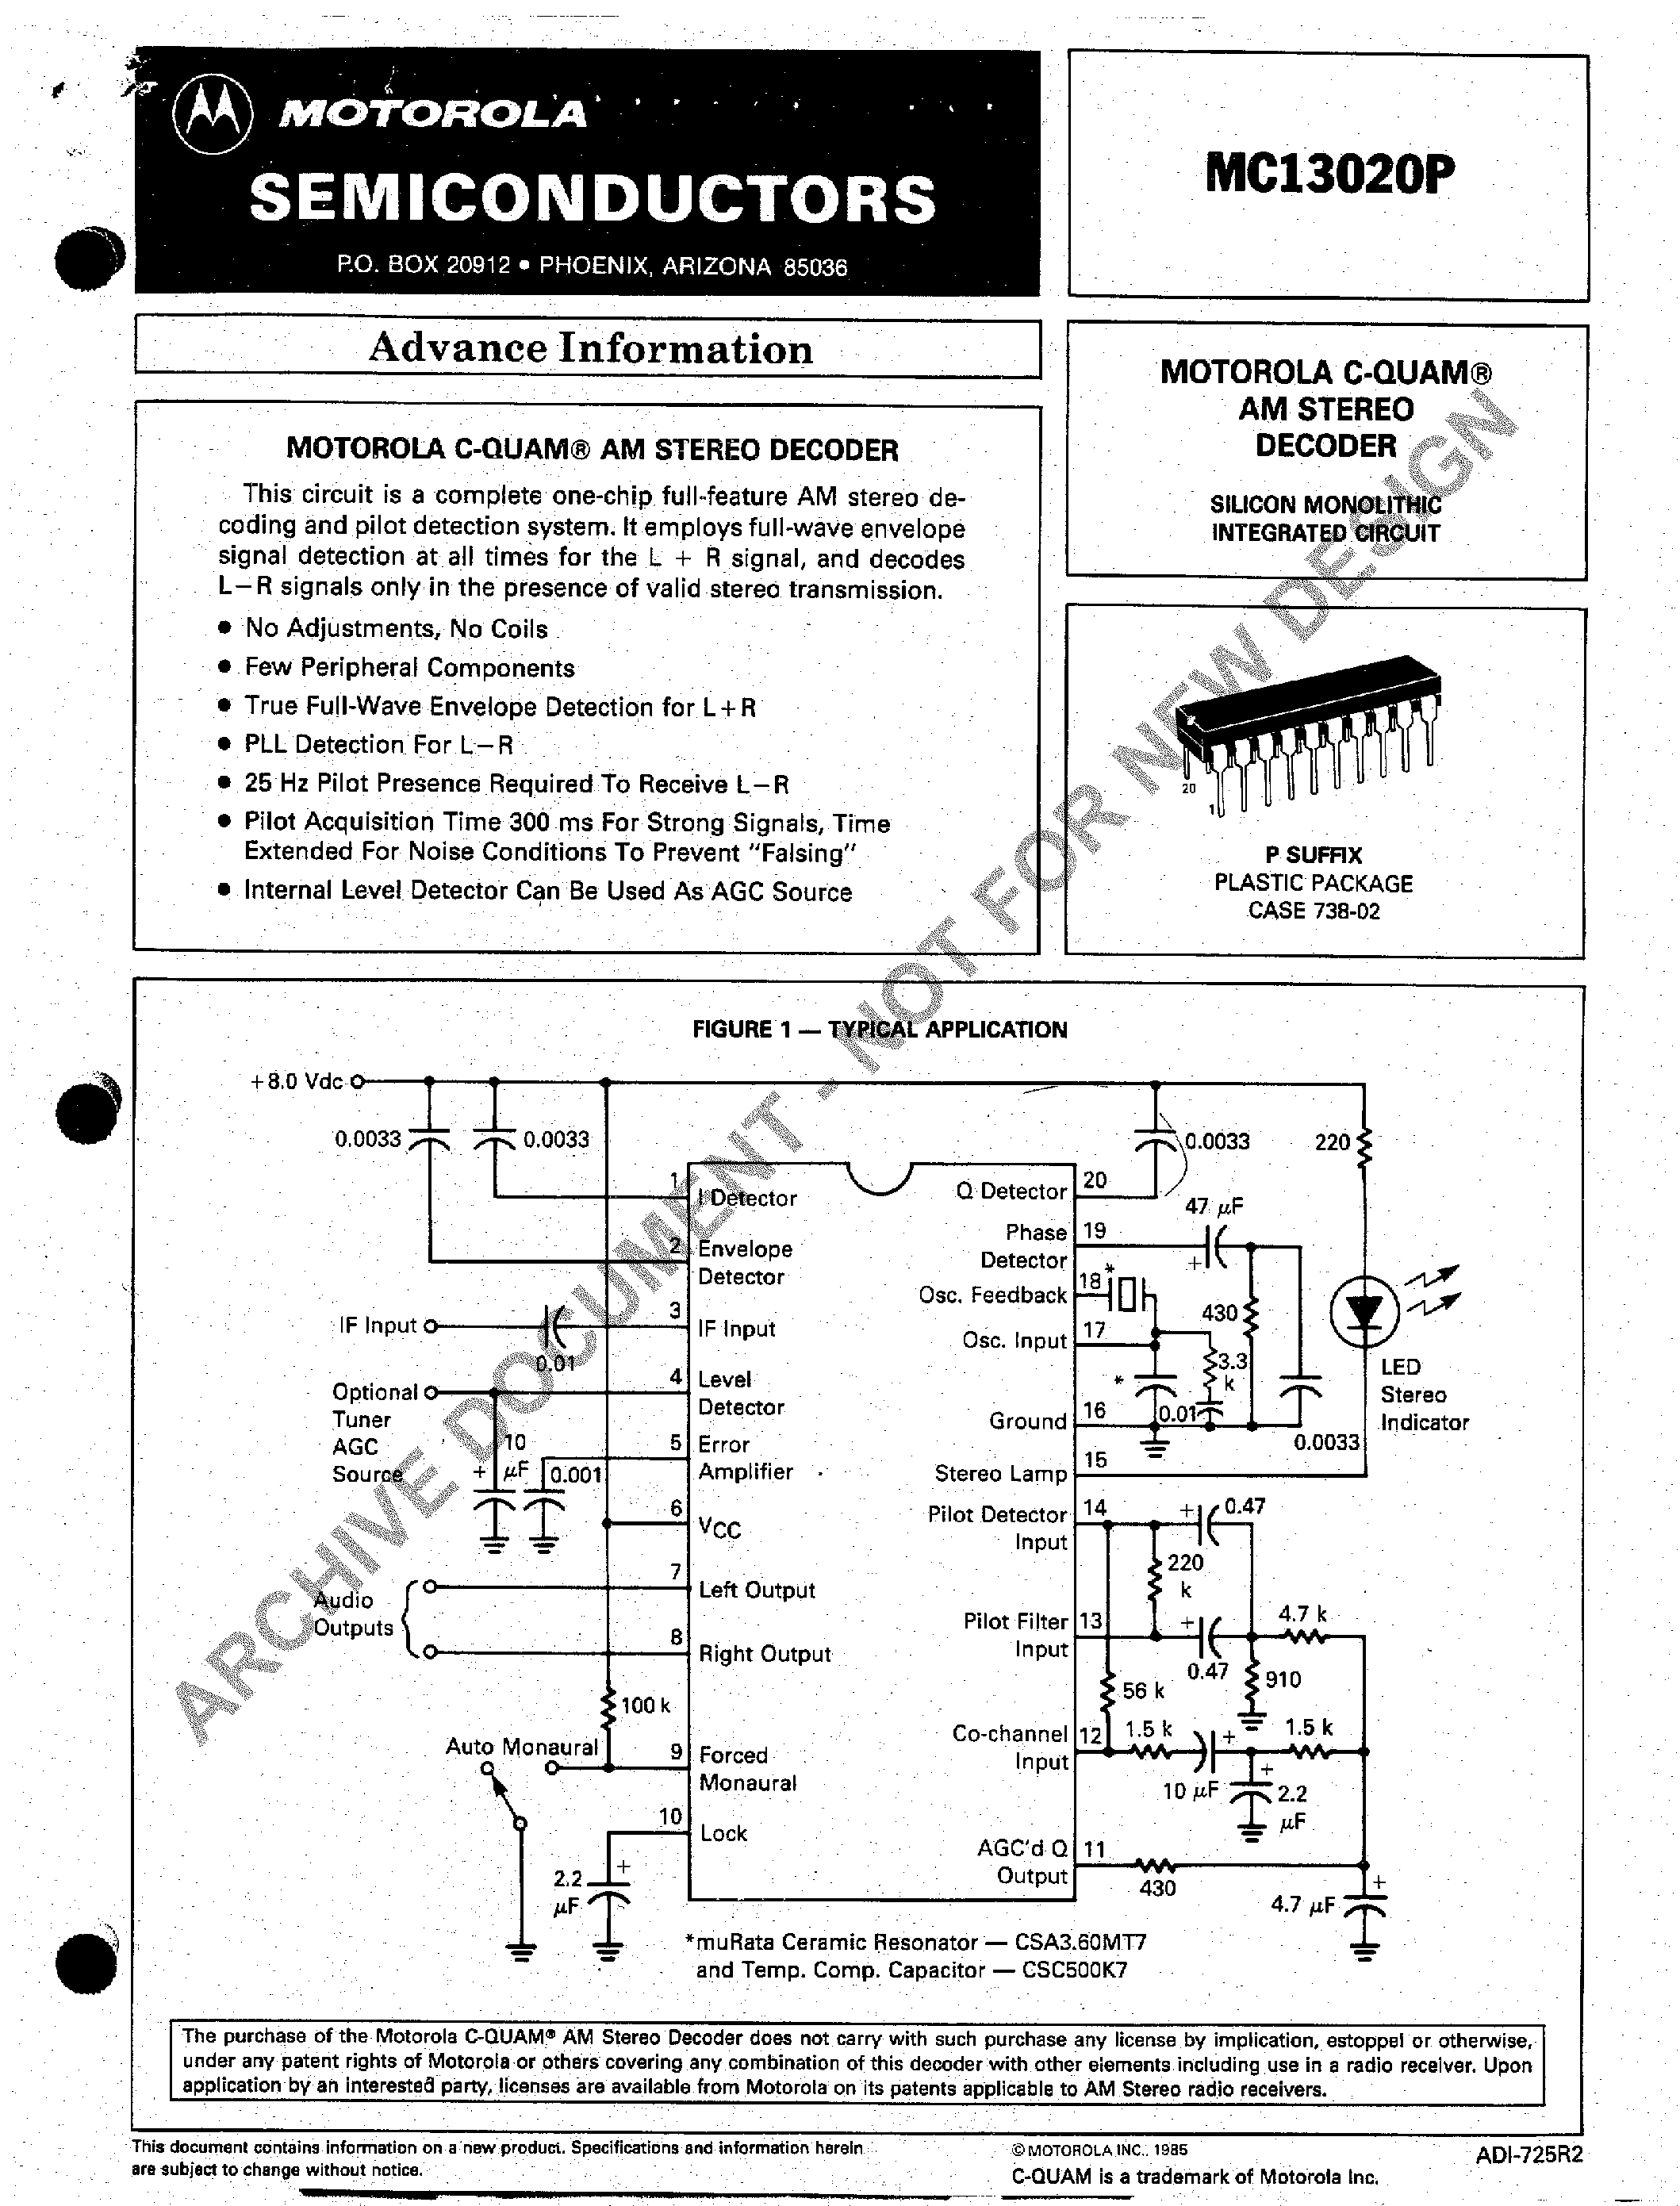 Datasheet MC13020P - MOTOROLA C-QUAM AM STEREO DECODER page 1